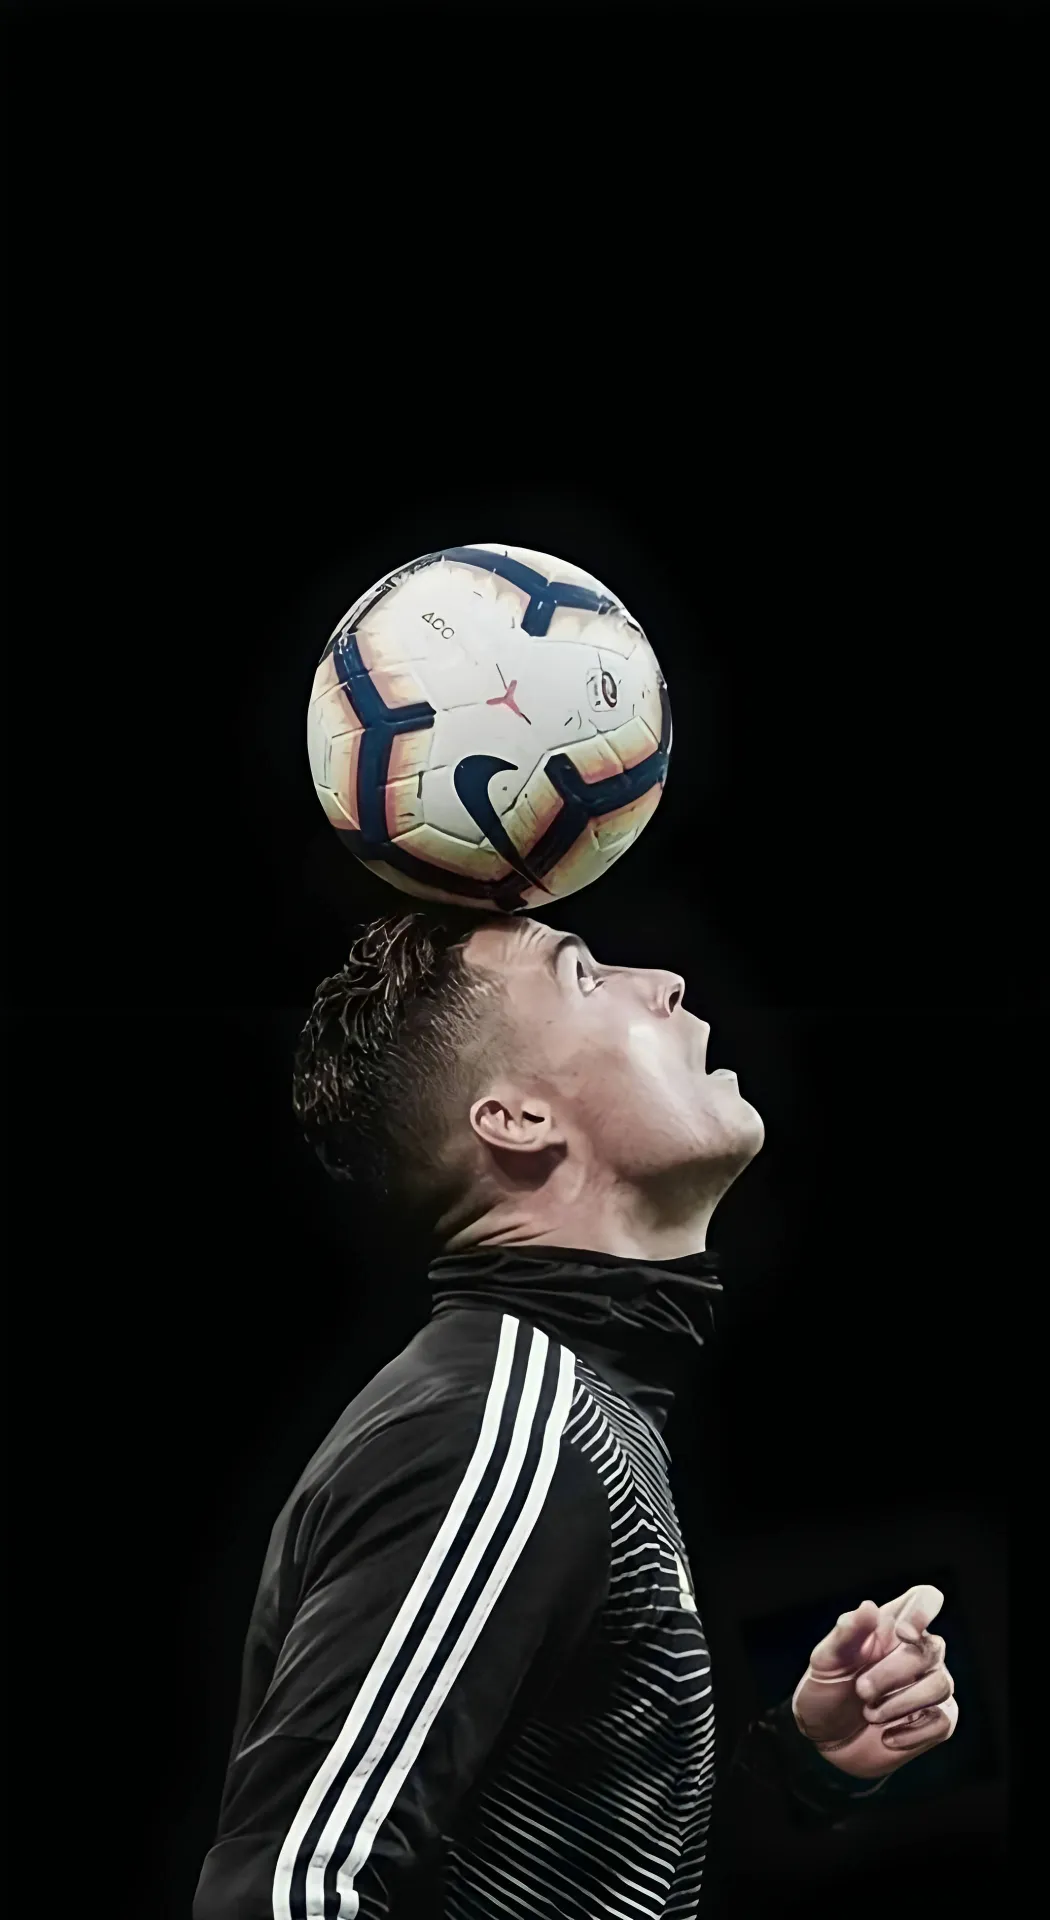 thumb for Cristiano Ronaldo Football Wallpaper